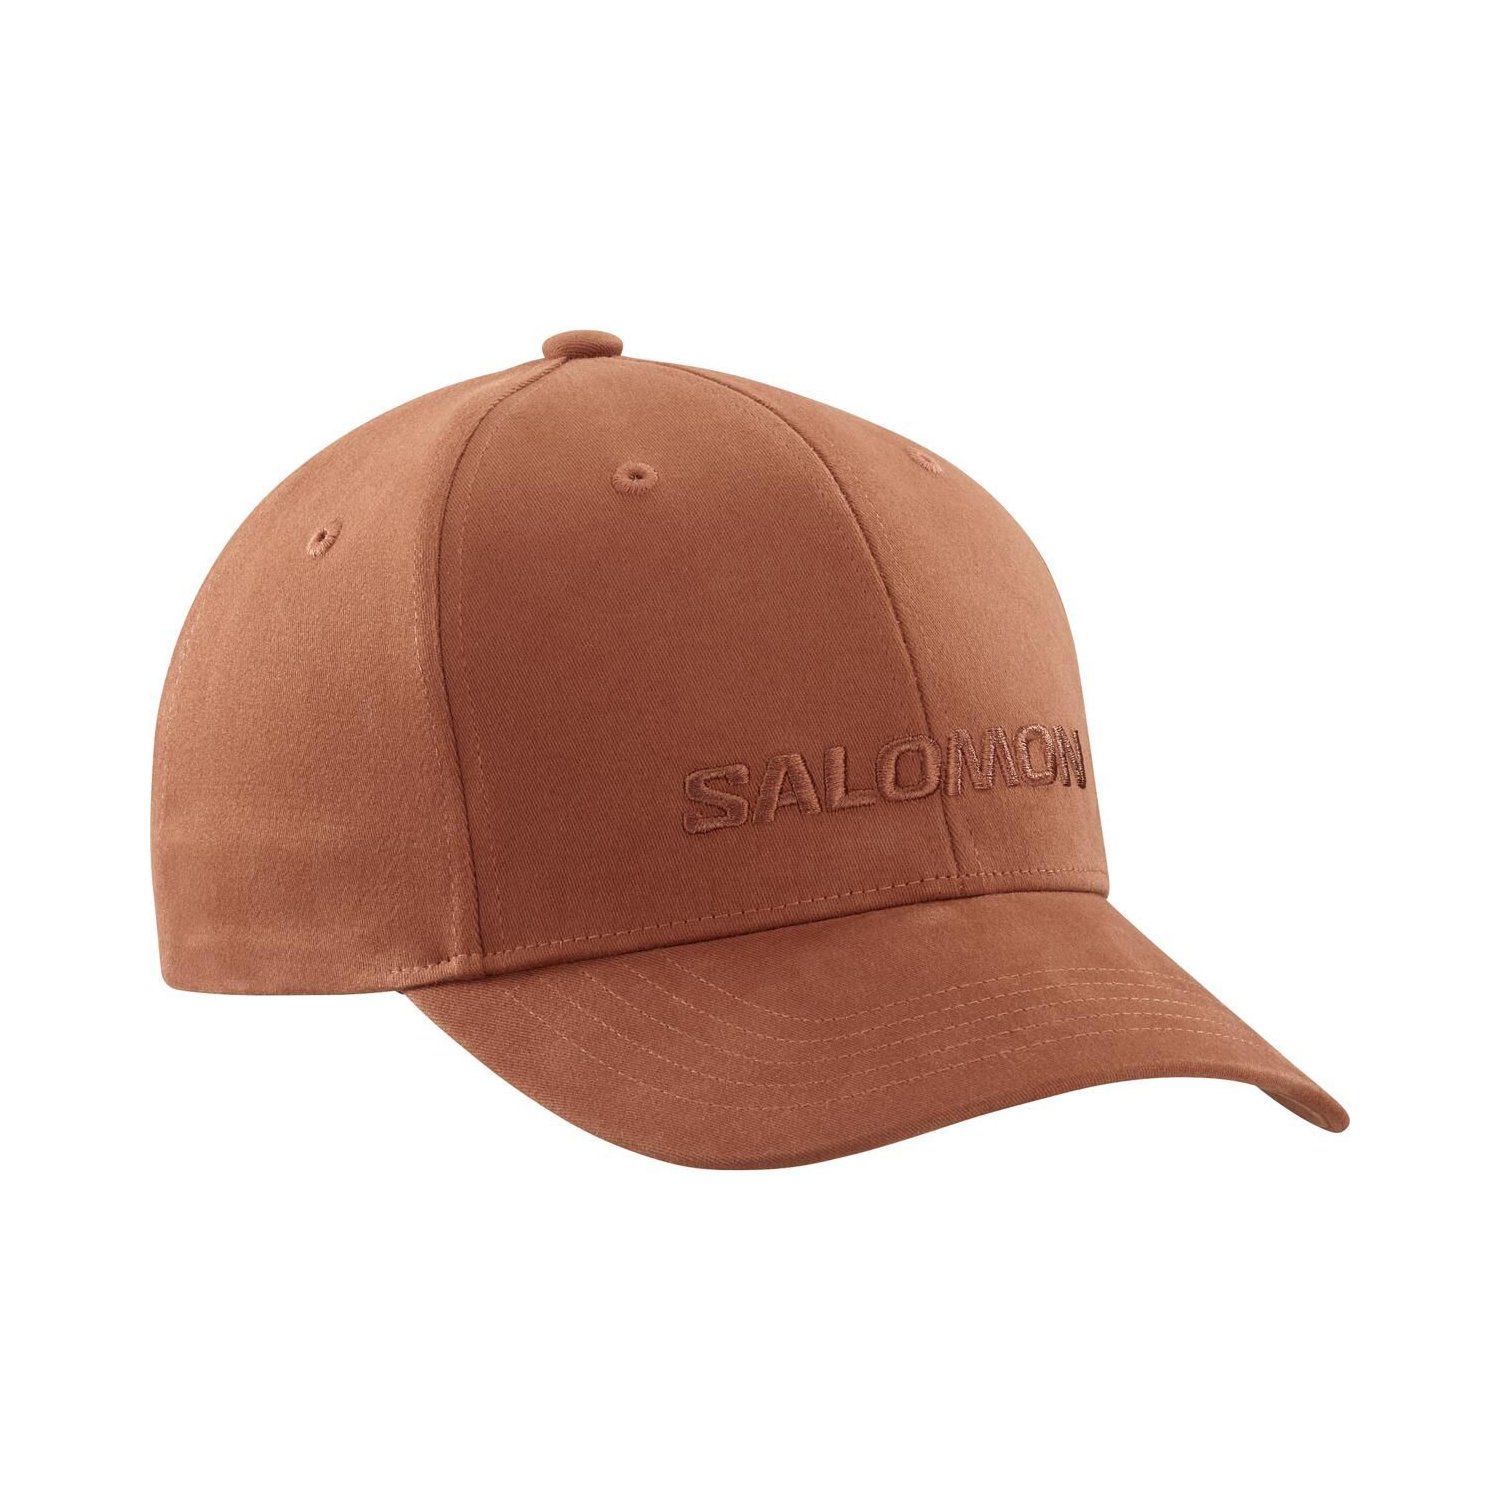 Salomon Logo Şapka - Renkli - 1